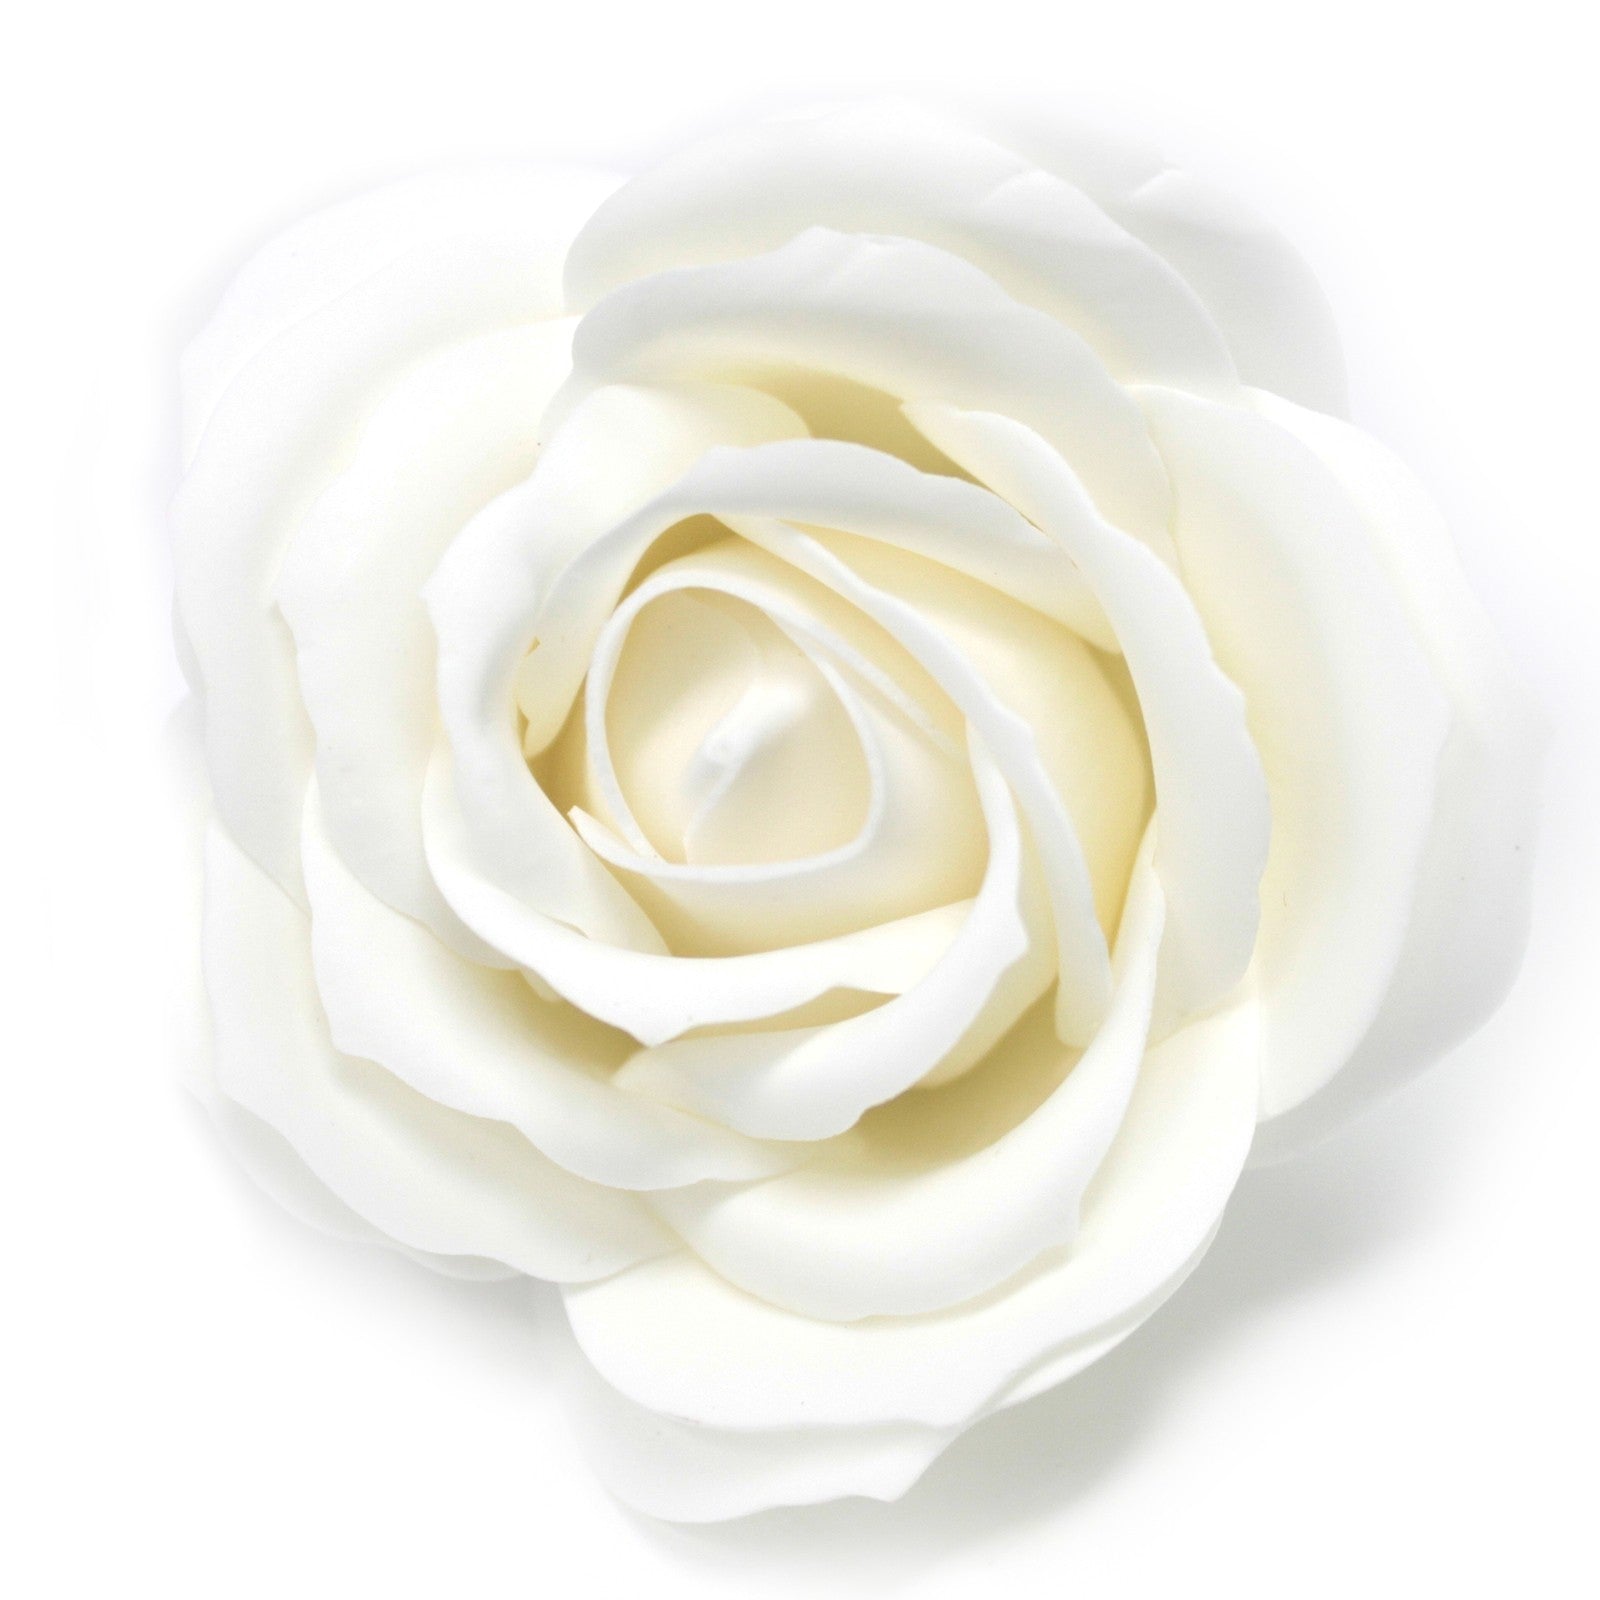 Craft Soap Flowers - Lrg Rose - White x 10 pcs